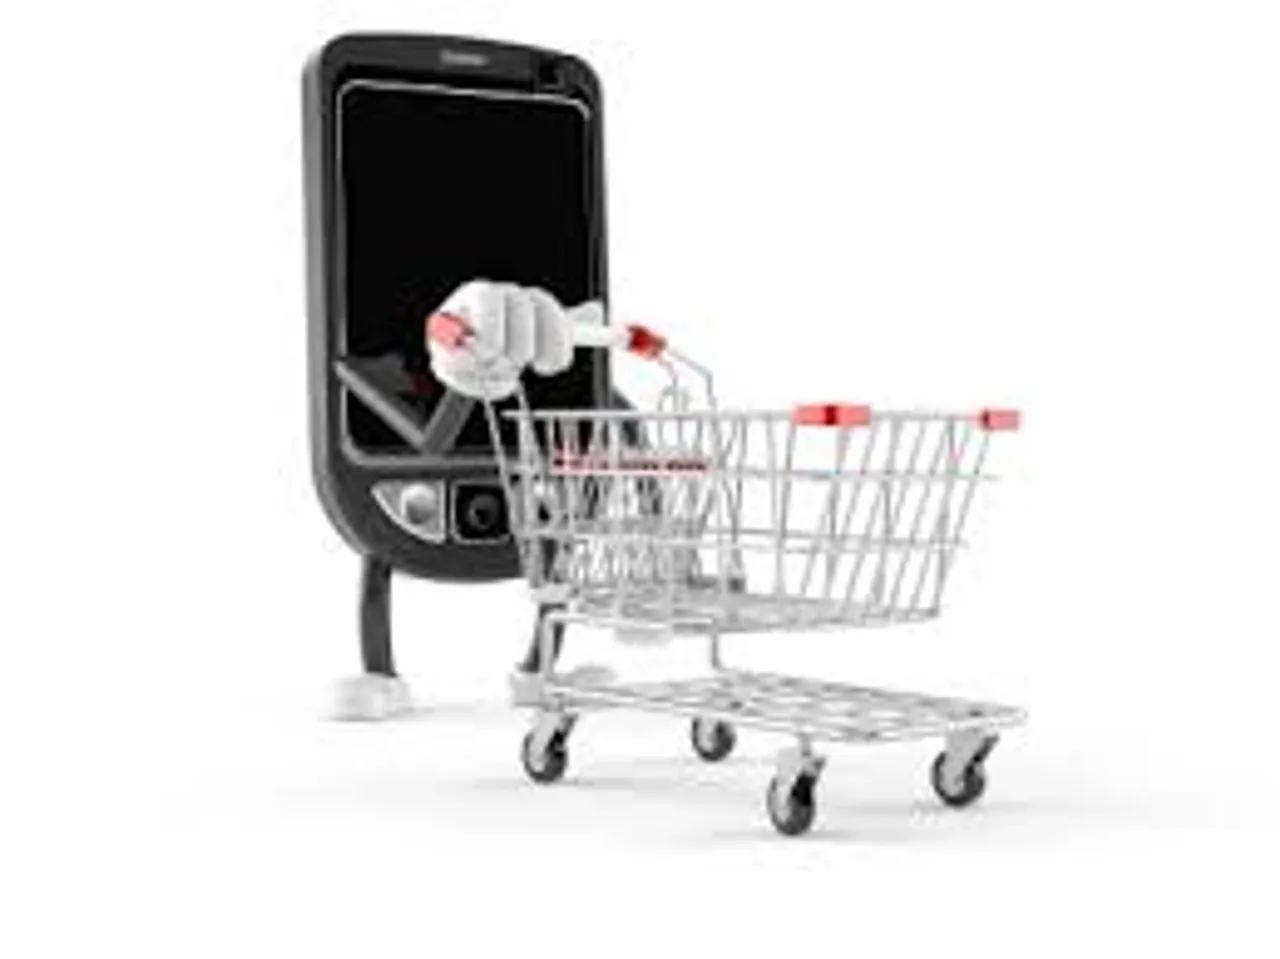 consumer buying process using social media